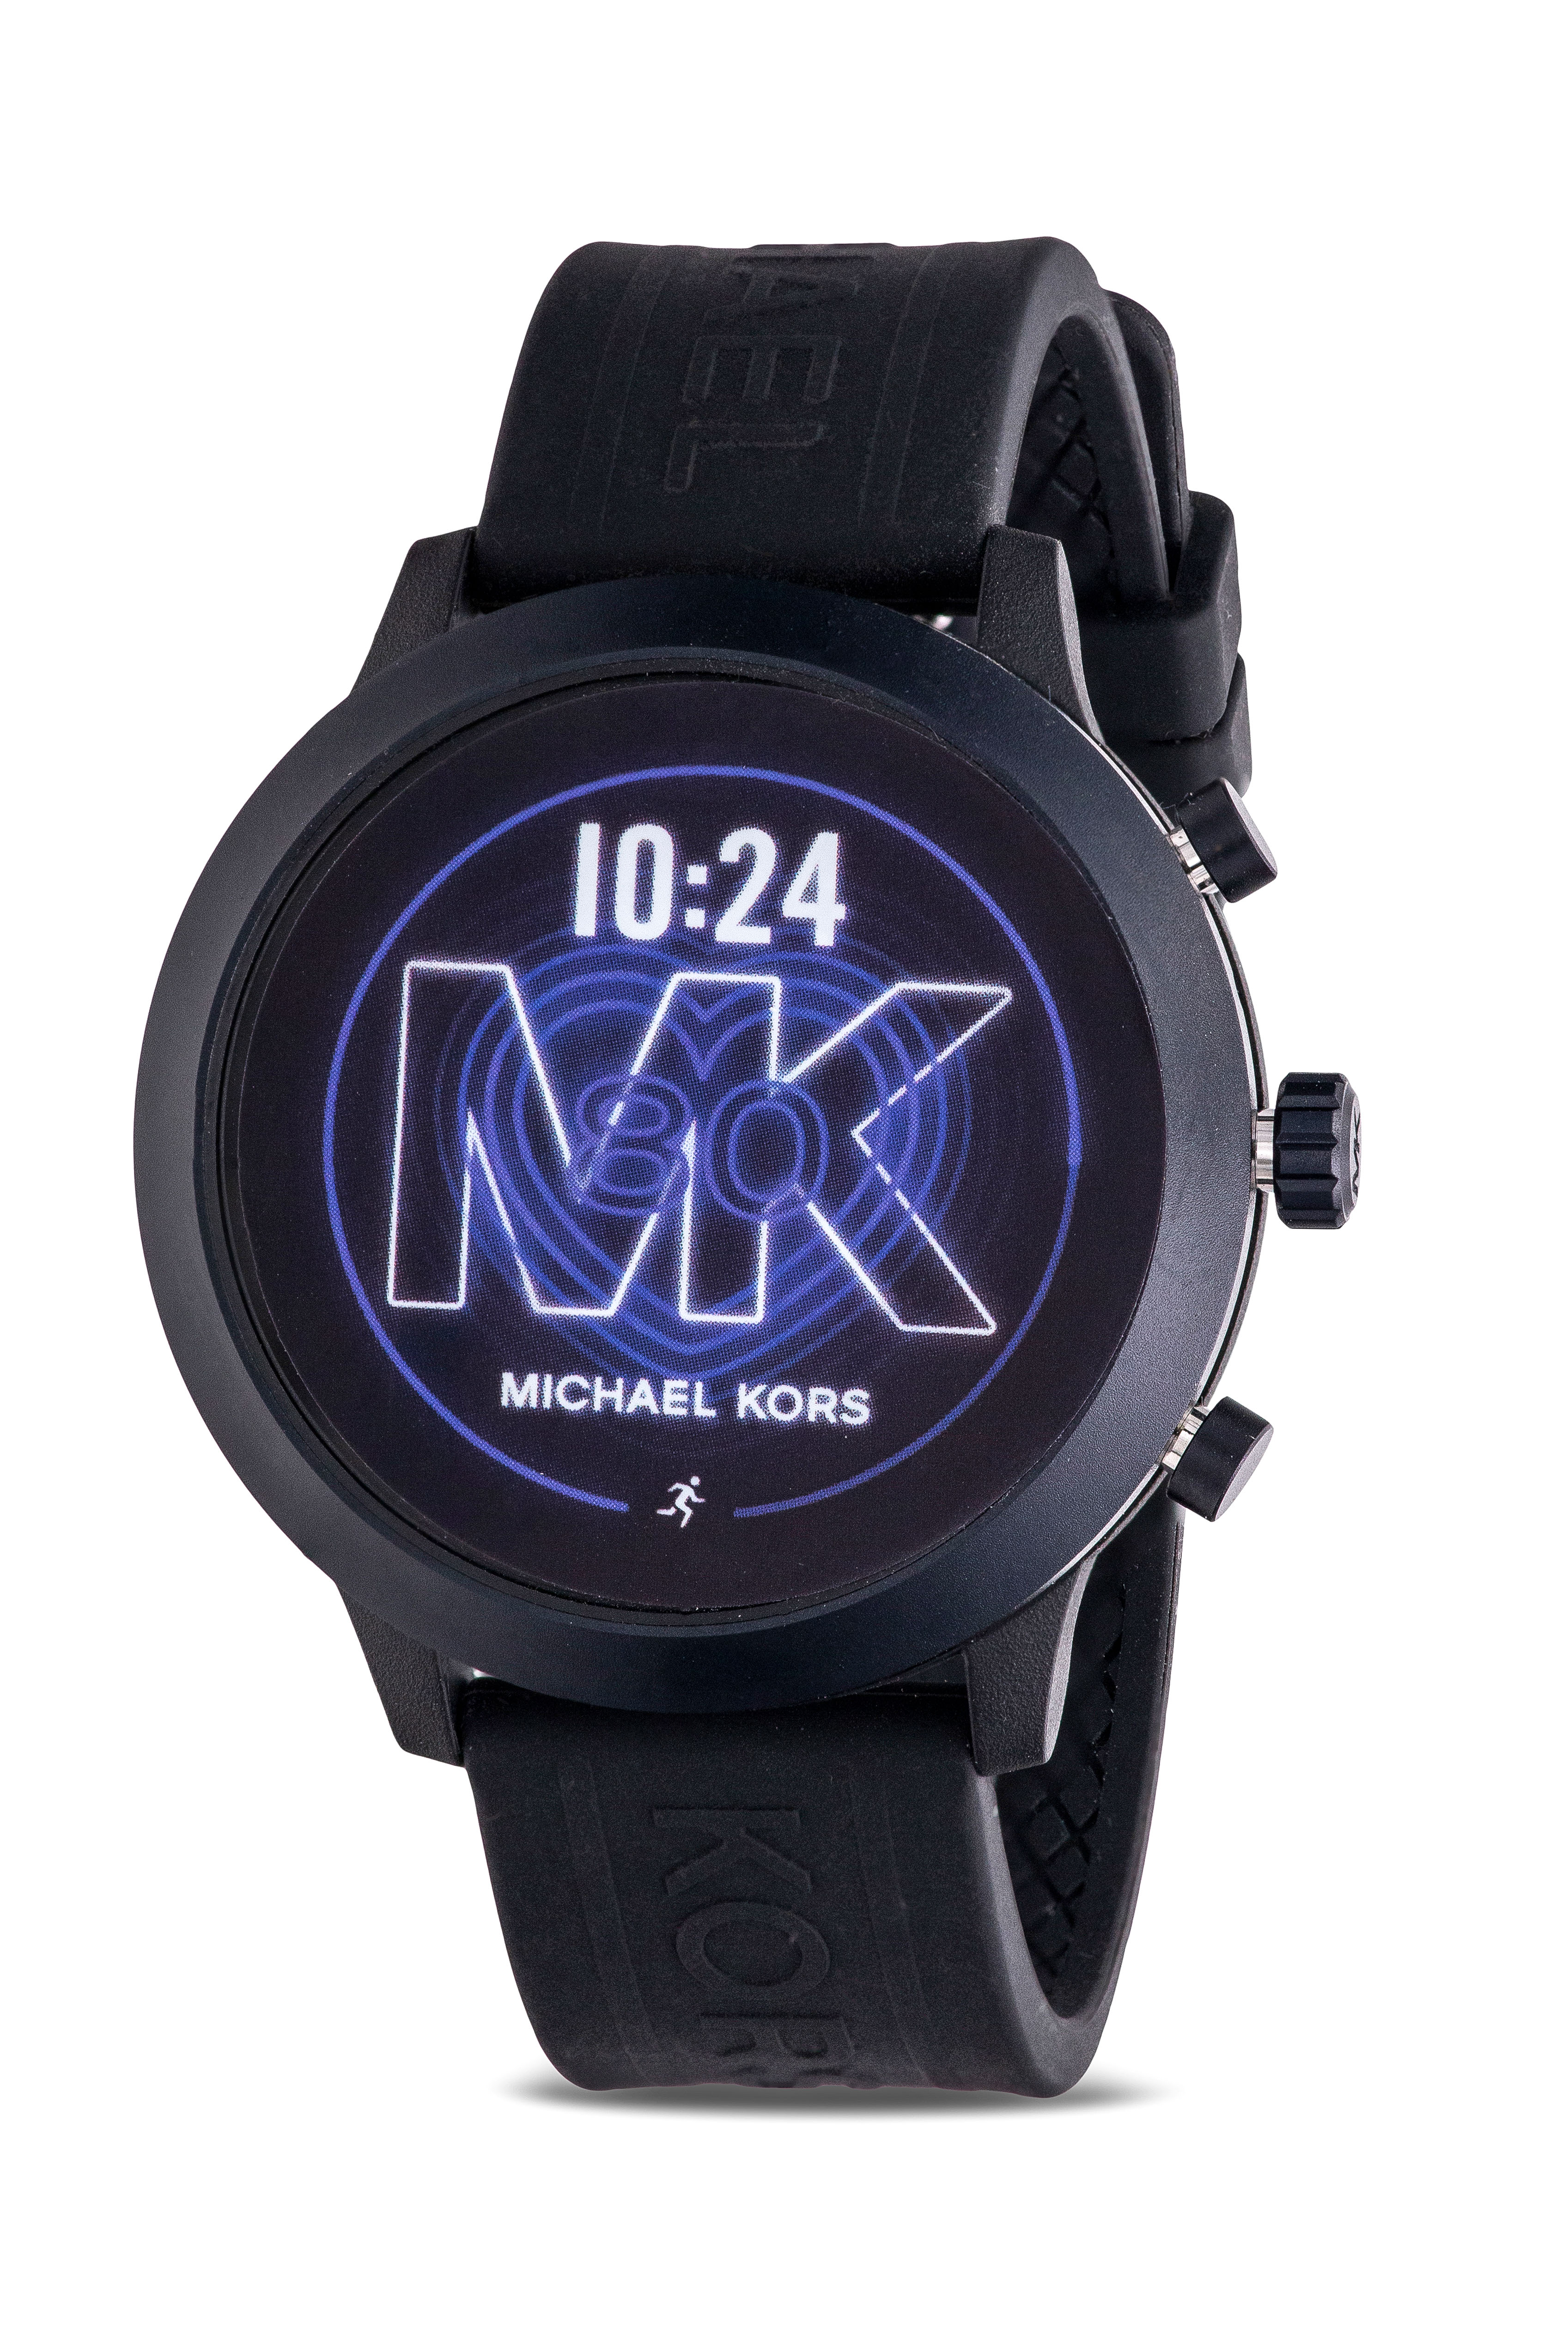 smartwatch michael kors ebay